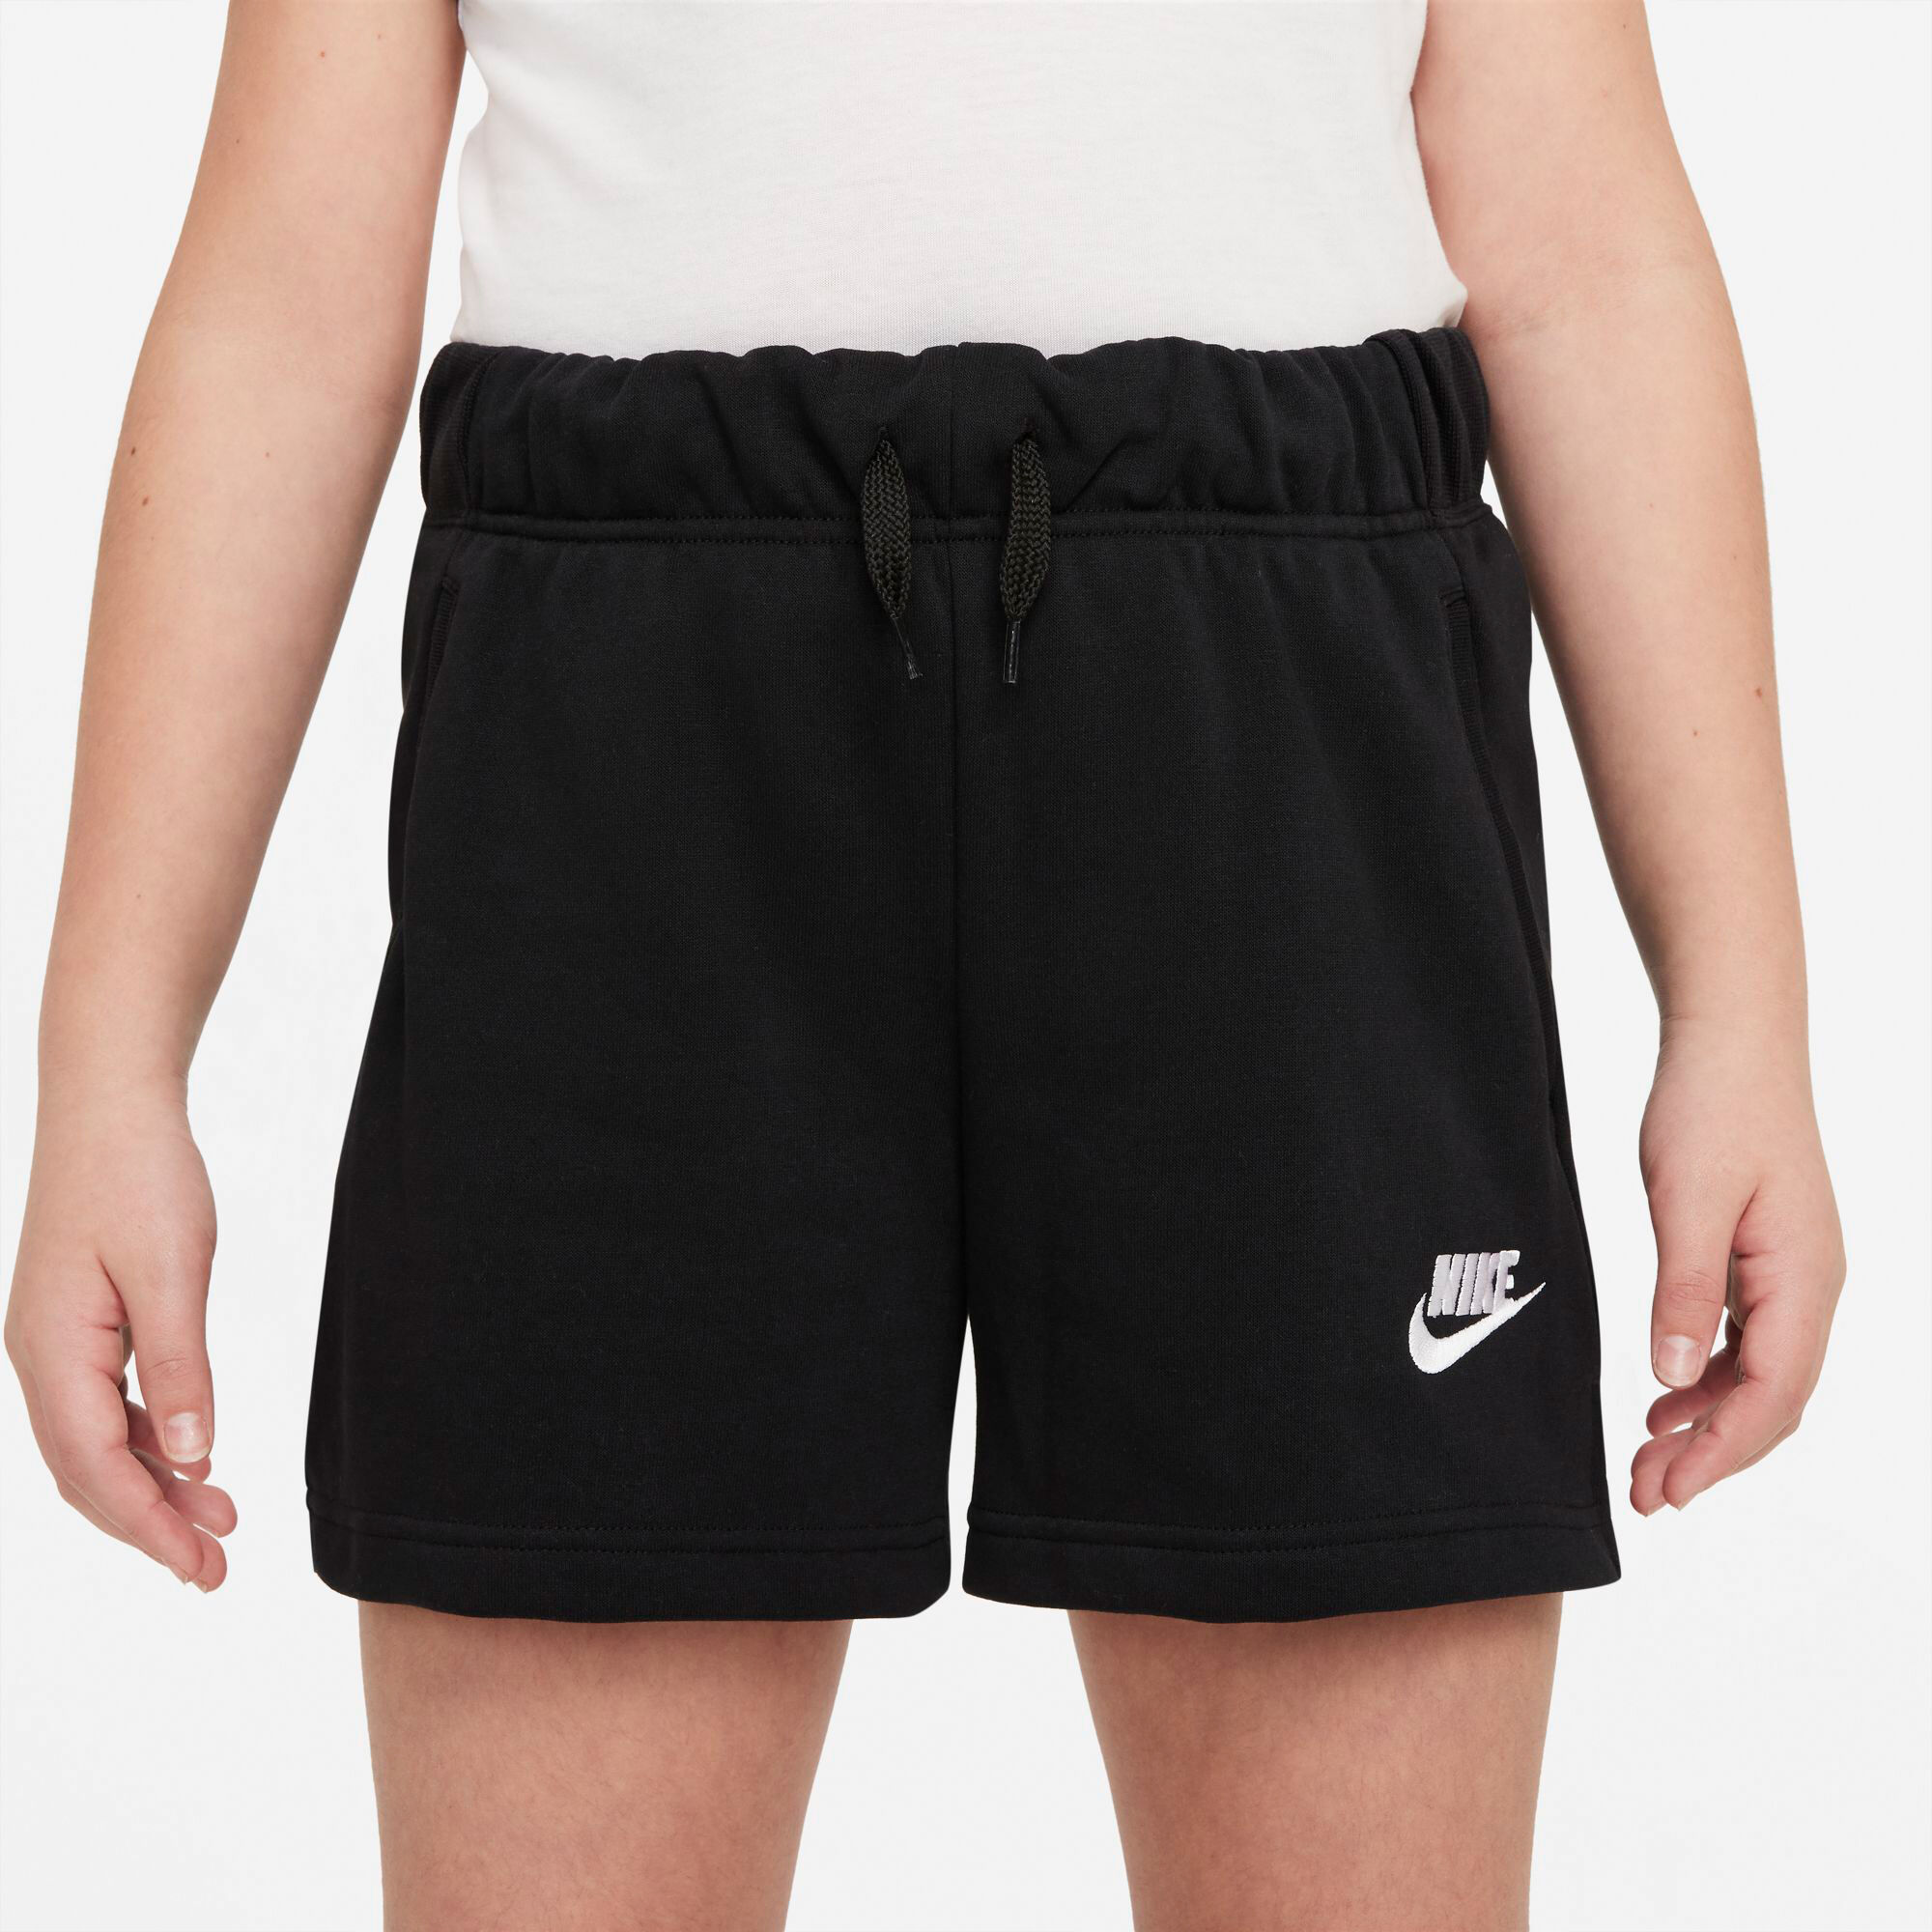 Шорты предложение. Шорты Nike Sportswear Club. Шорты подростковые. Шорты для подростков черные. Подростковые шорты найк женские.